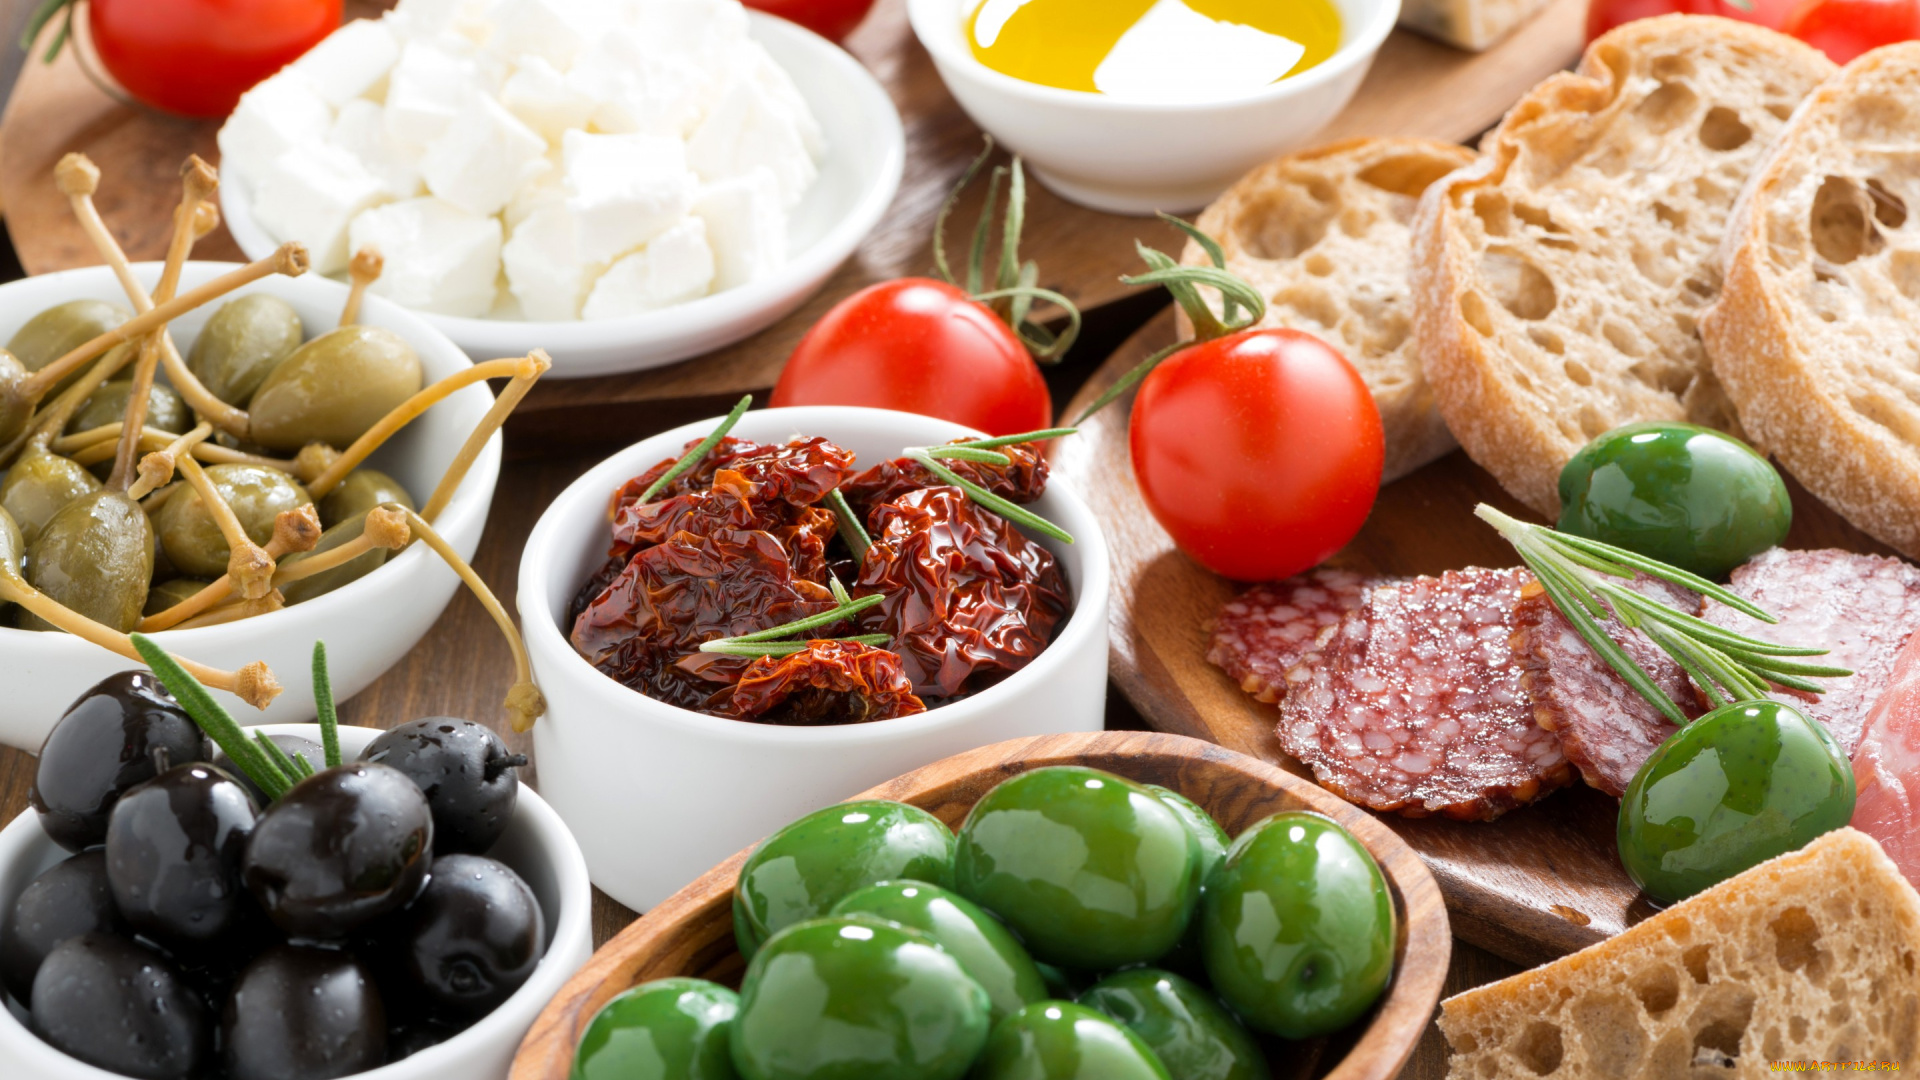 еда, разное, bread, olives, хлеб, vegetables, оливки, помидор, tomatoes, sausage, овощи, колбаса